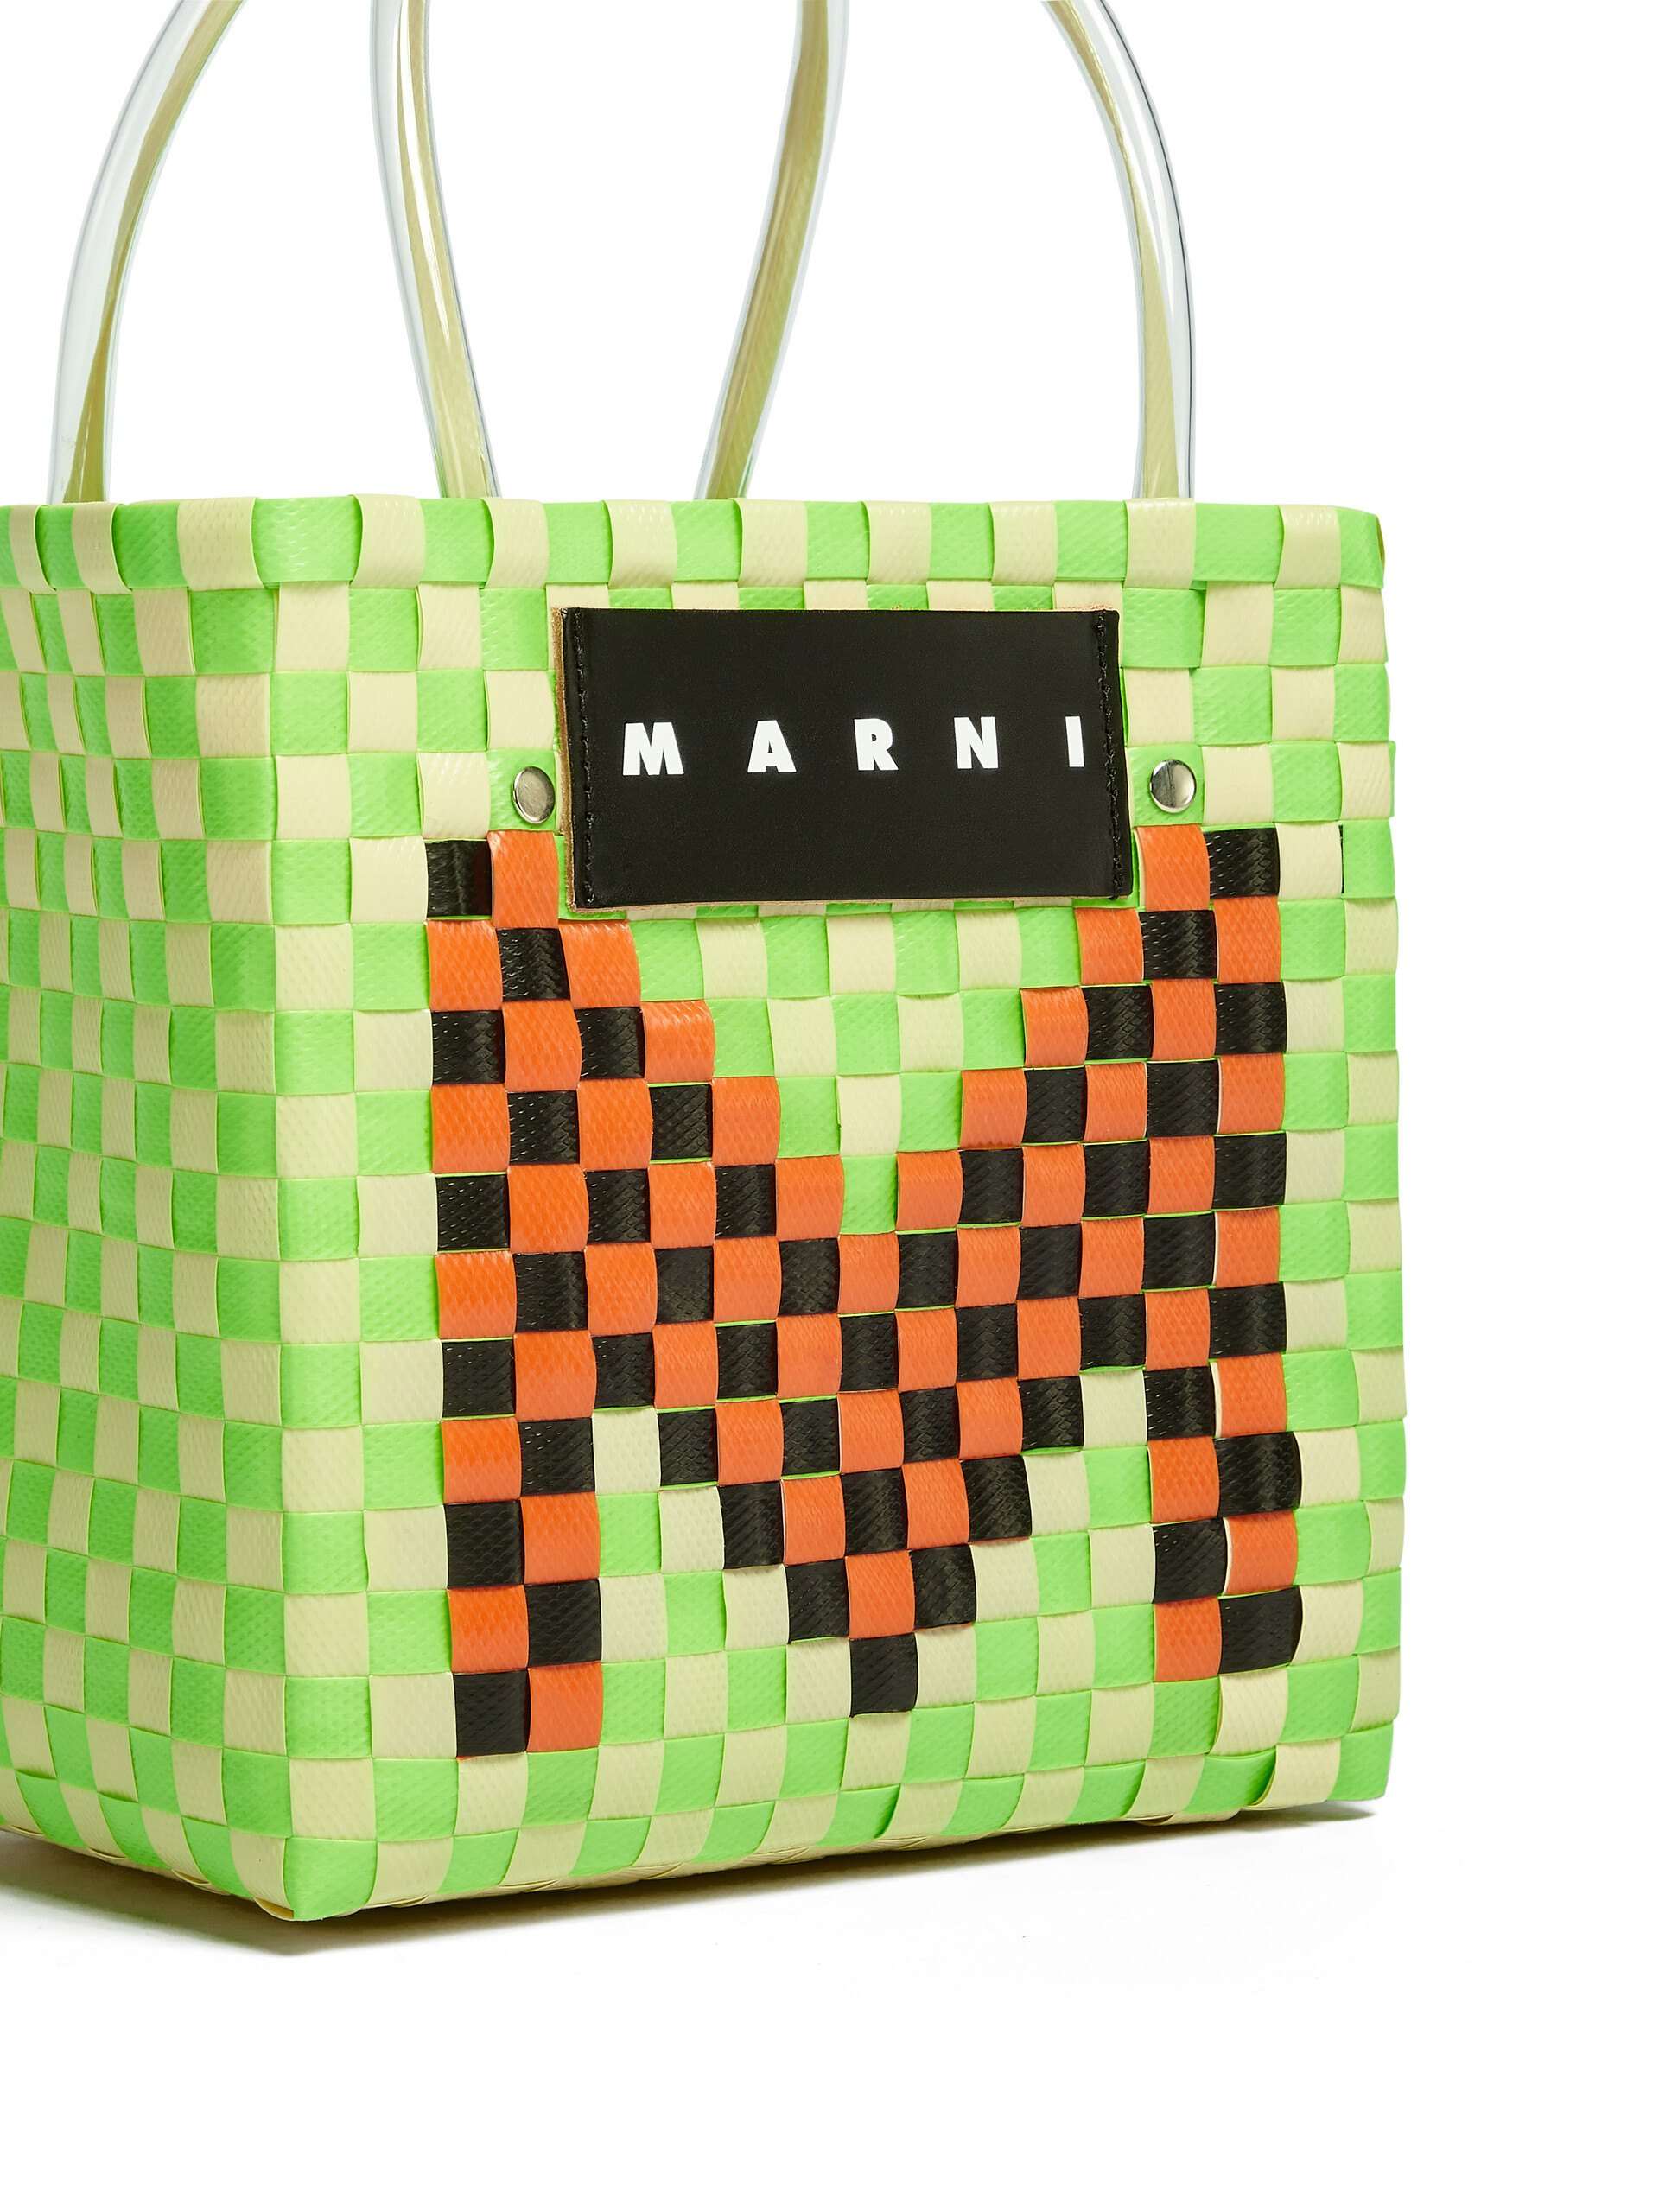 MARNI MARKET mini bag in polypropylene with green M logo - Bags - Image 4